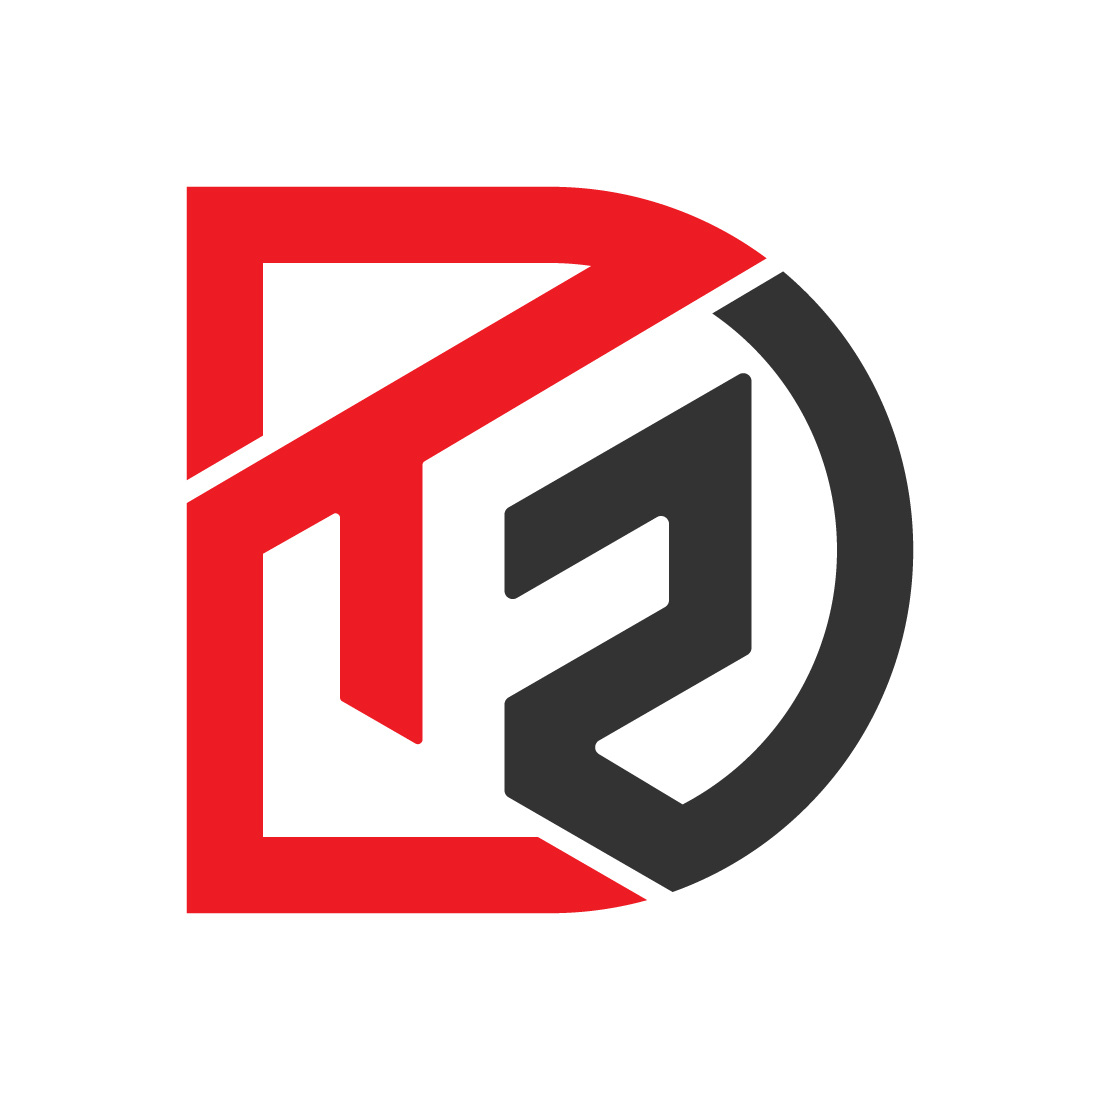 DTR Logo design preview image.